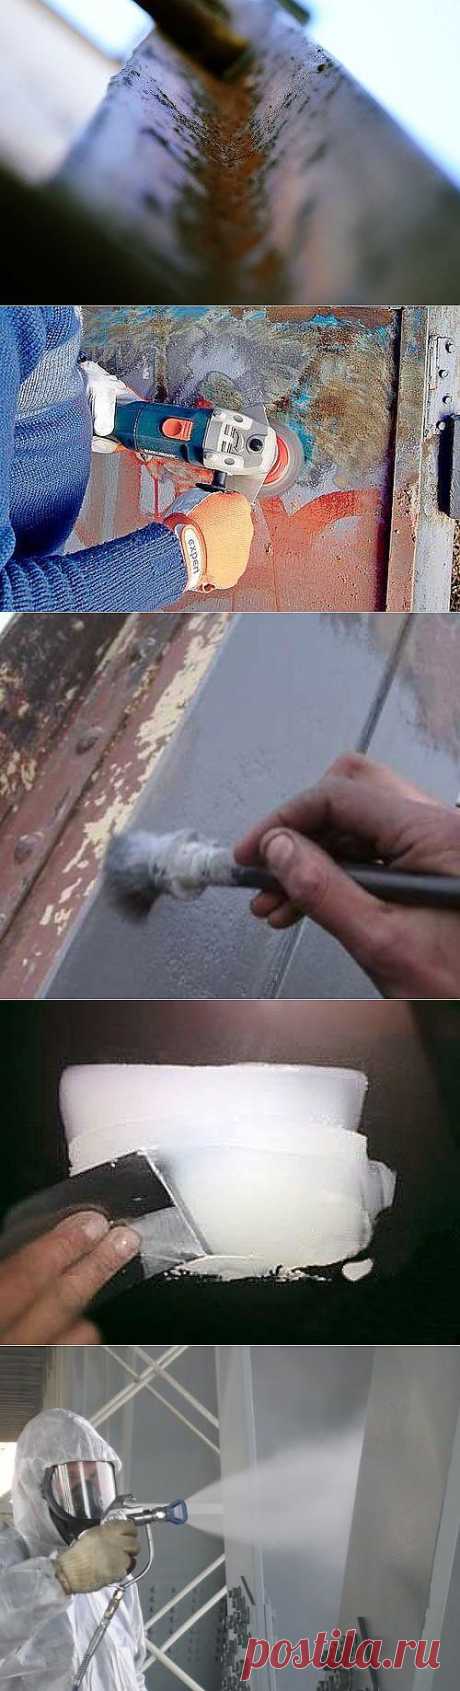 Защита и восстановление металлических поверхностей: подготовка, грунтовка, шпаклевка, покраска